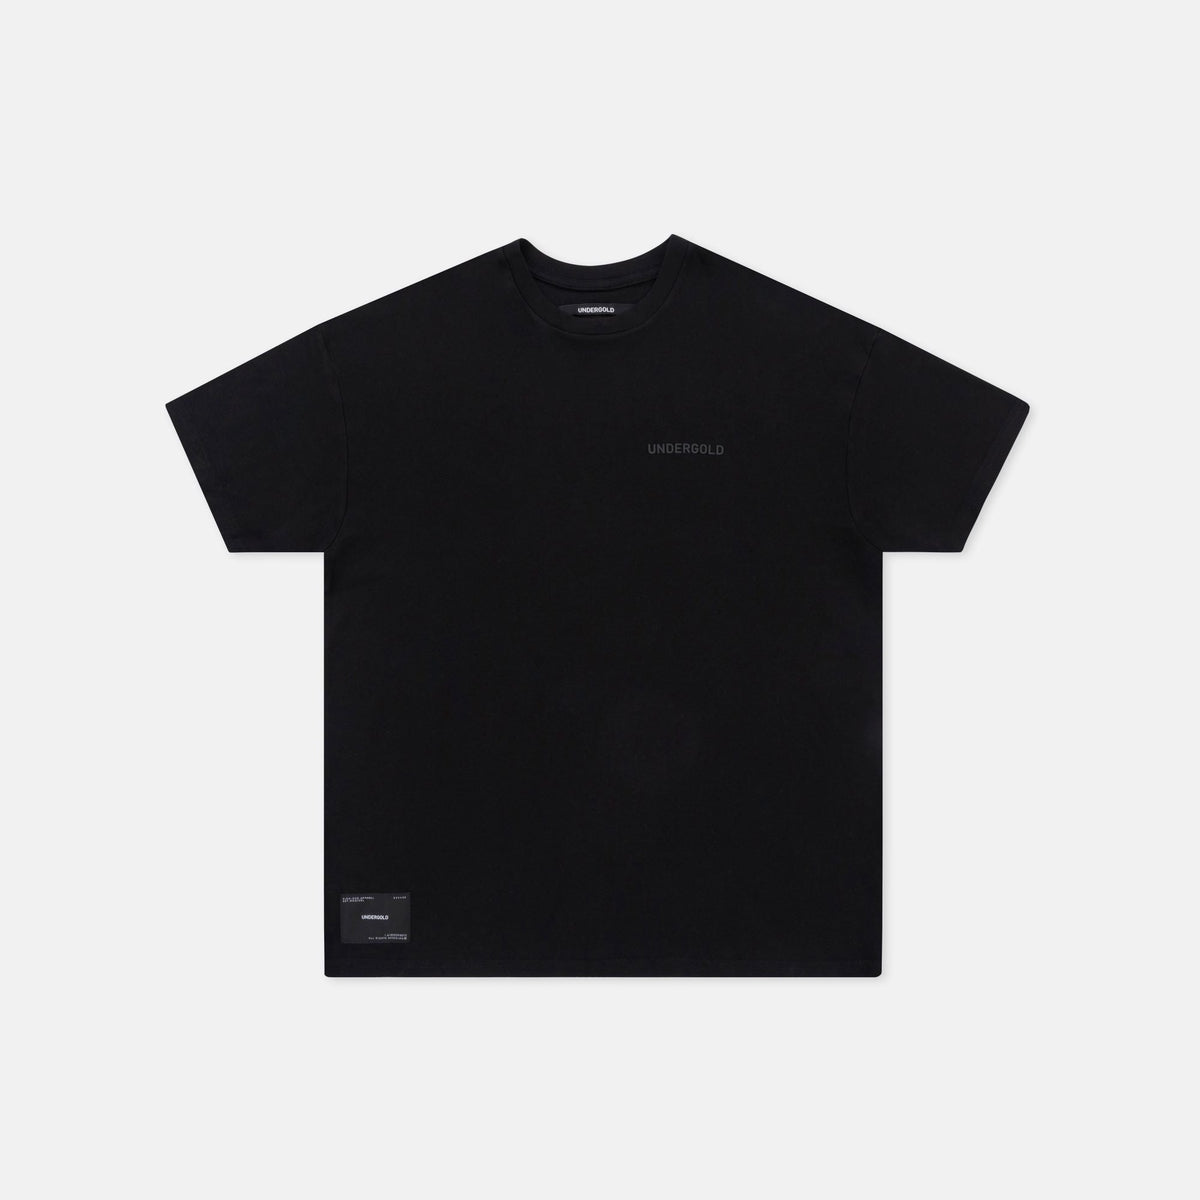 Undergold Basic Black T-shirt